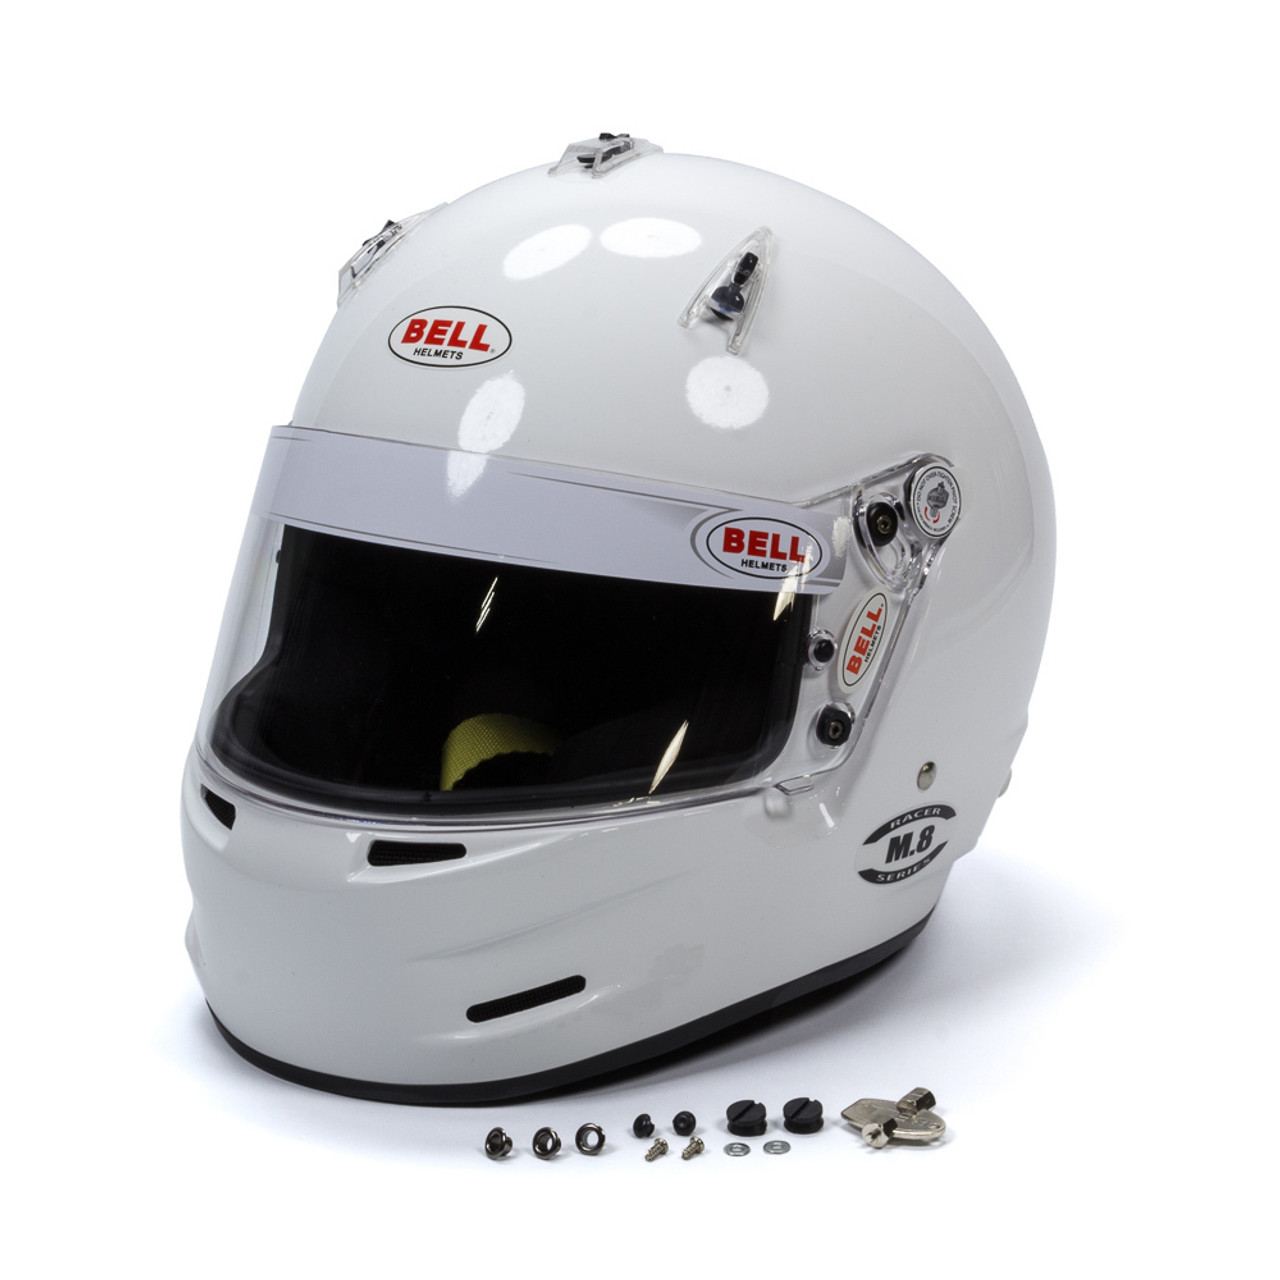 Bell Racing Helmet M8 Medium White SA2020